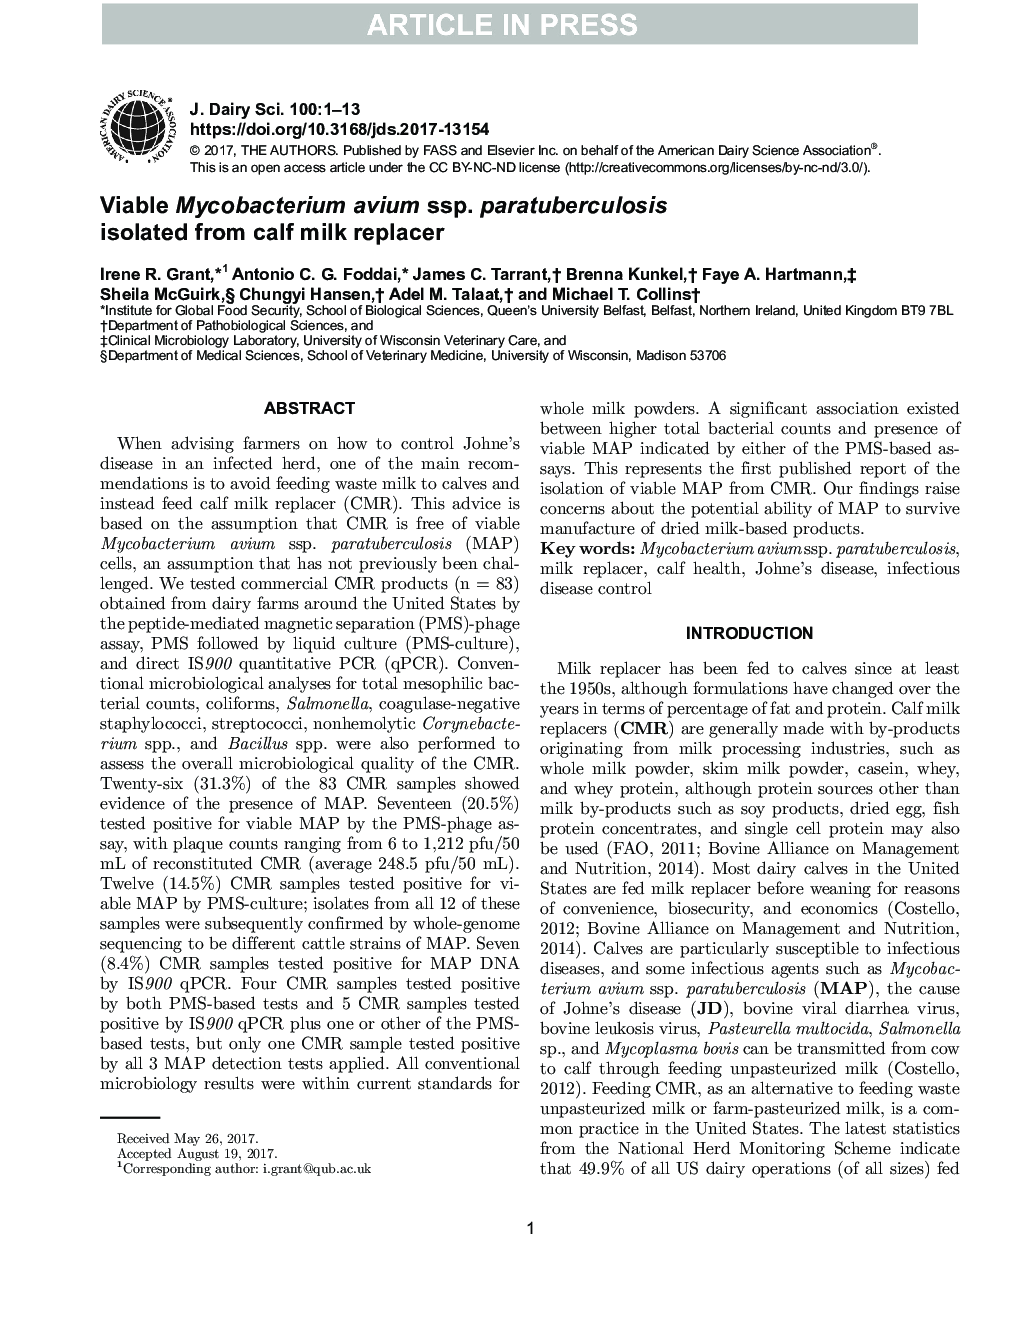 Viable Mycobacterium avium ssp. paratuberculosis isolated from calf milk replacer